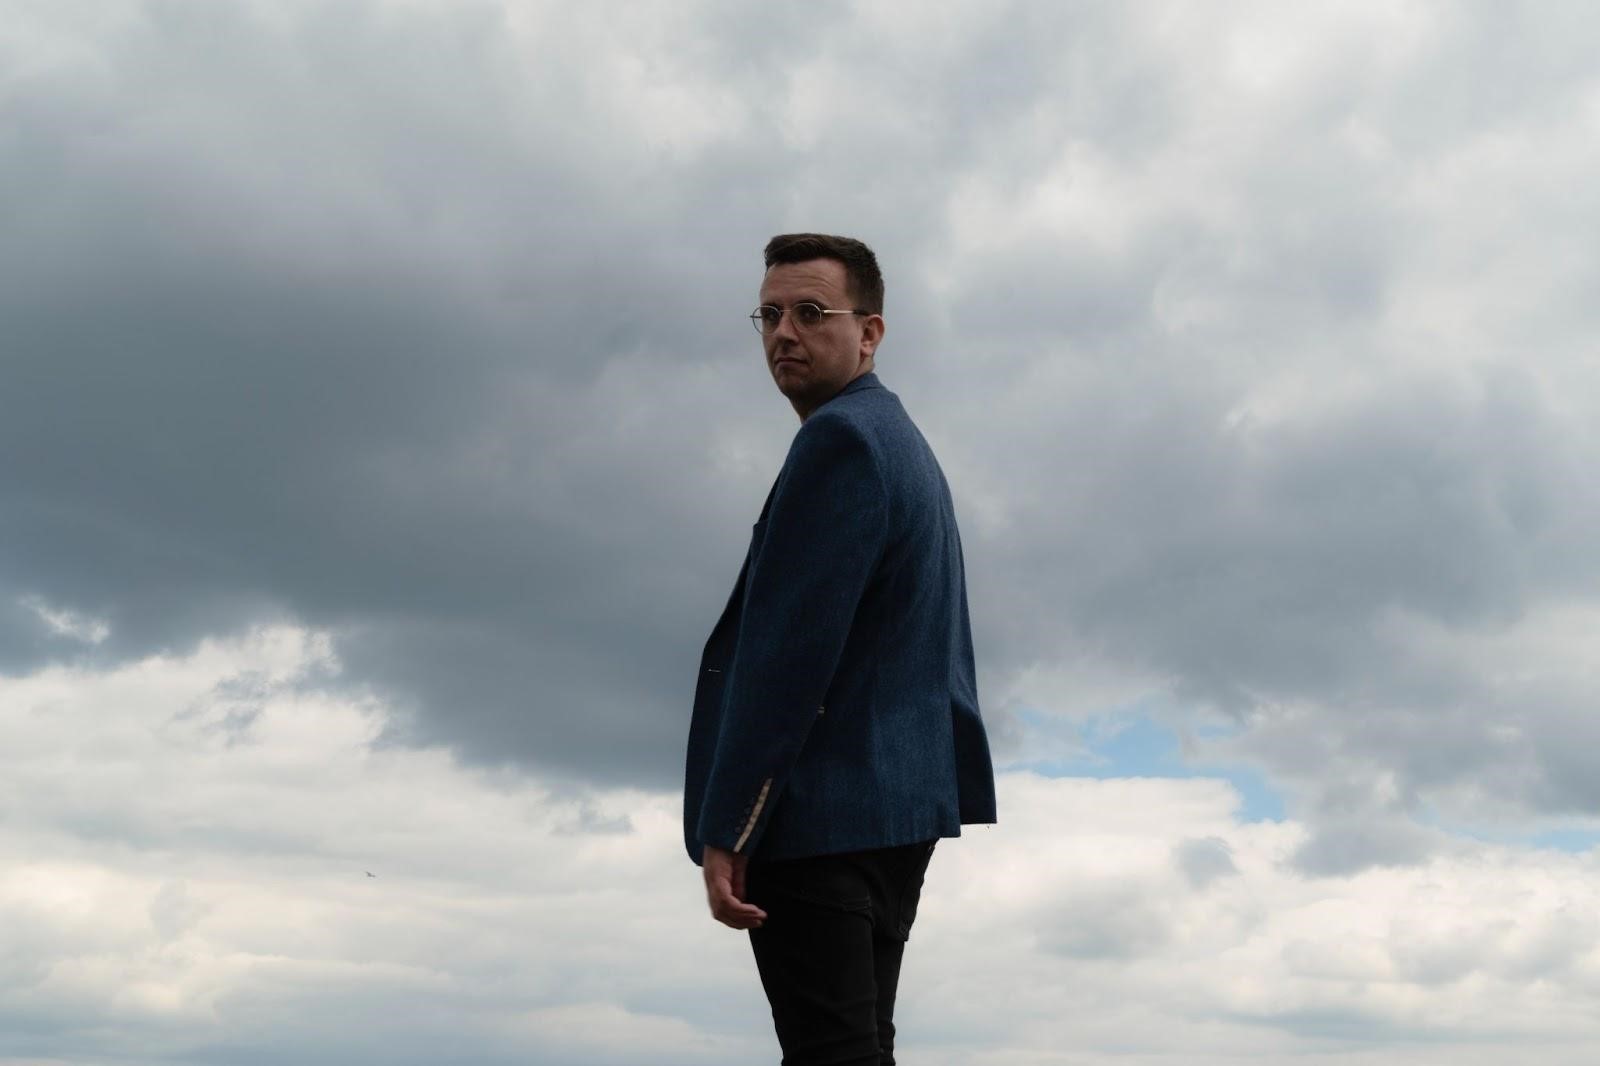 Rising Irish singer-songwriter Luke Clerkin releases his electrifying new single “Supernova” on July 26